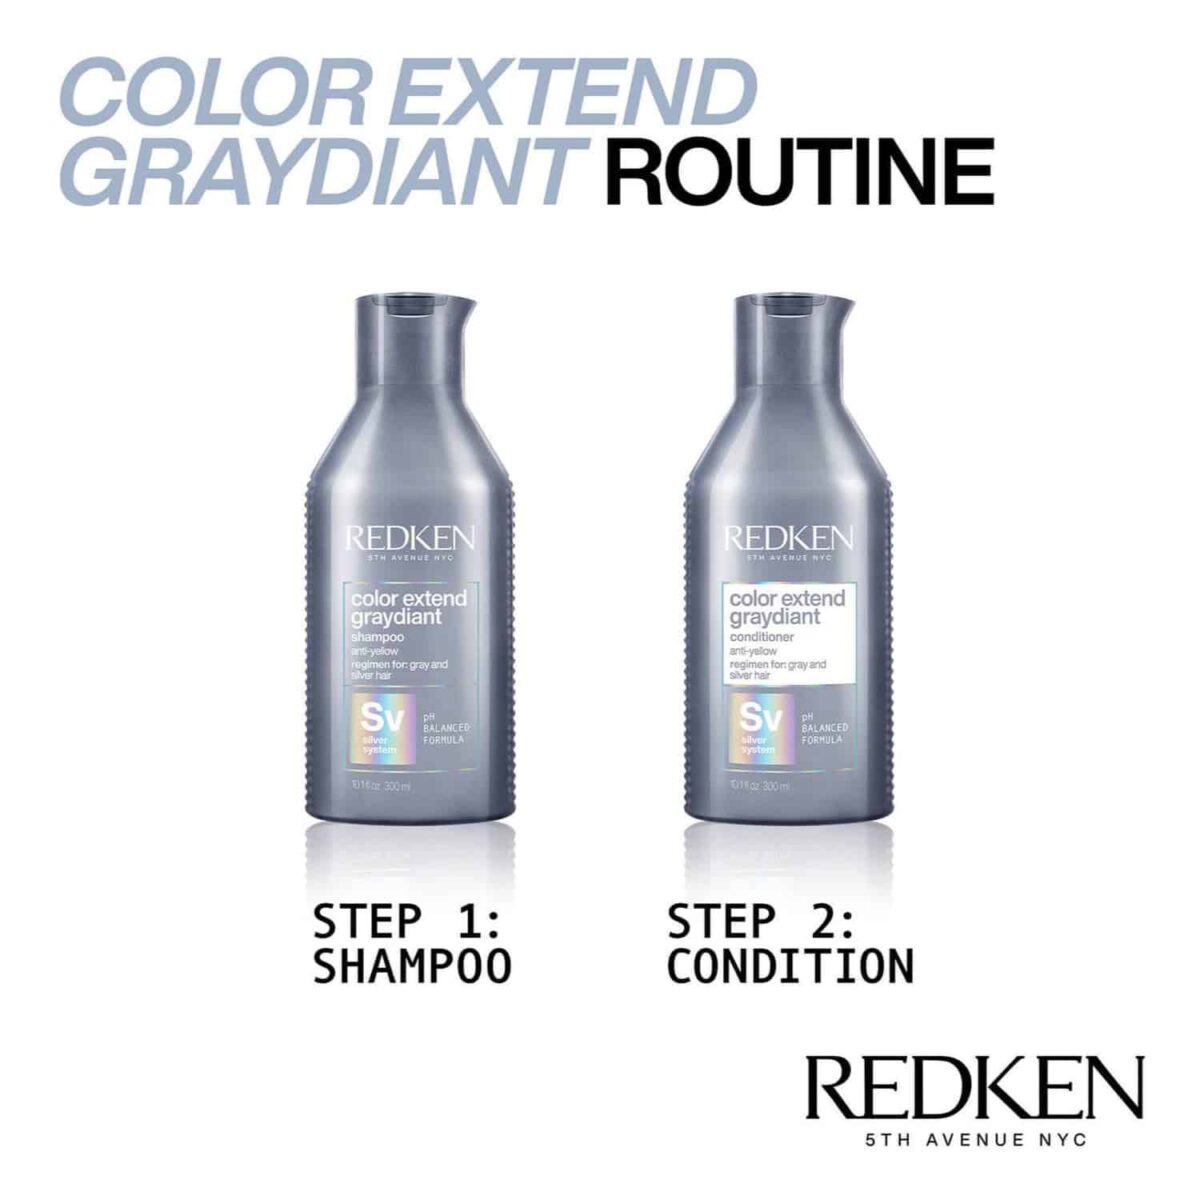 Redken Color Extend Graydiant Shampoo routine